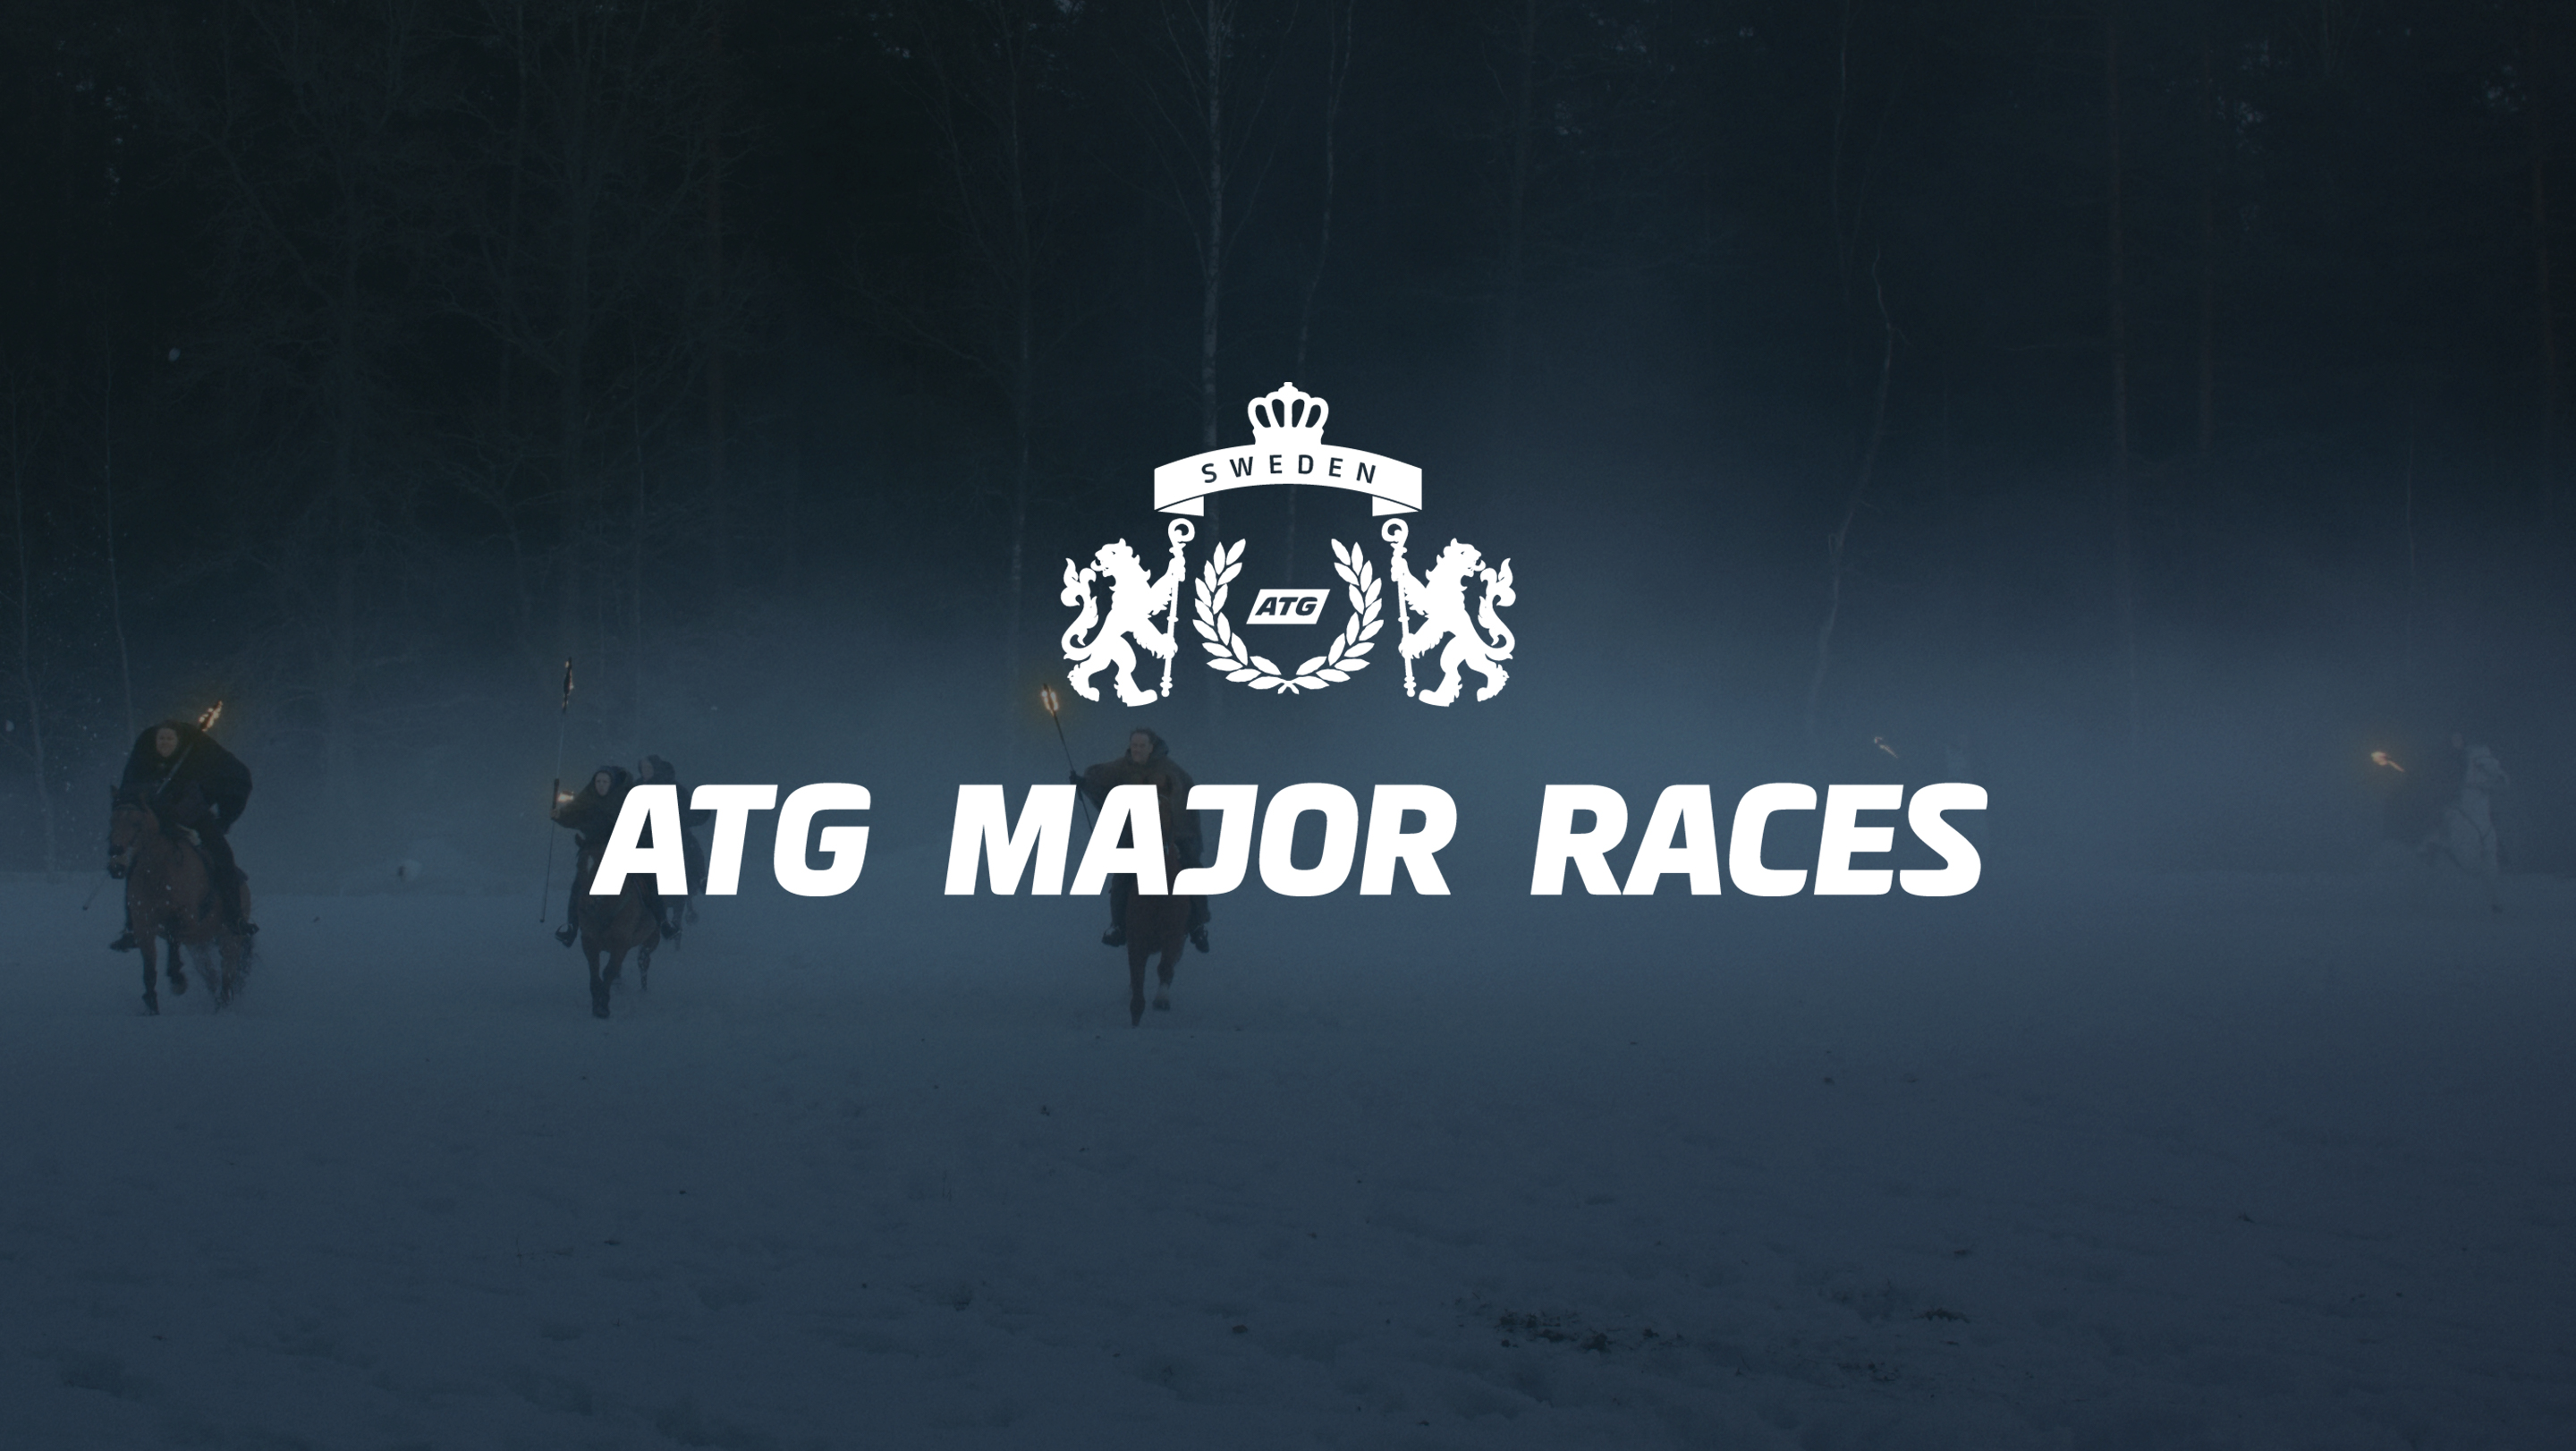 ATG Major Races, en kampanj från Phosworks